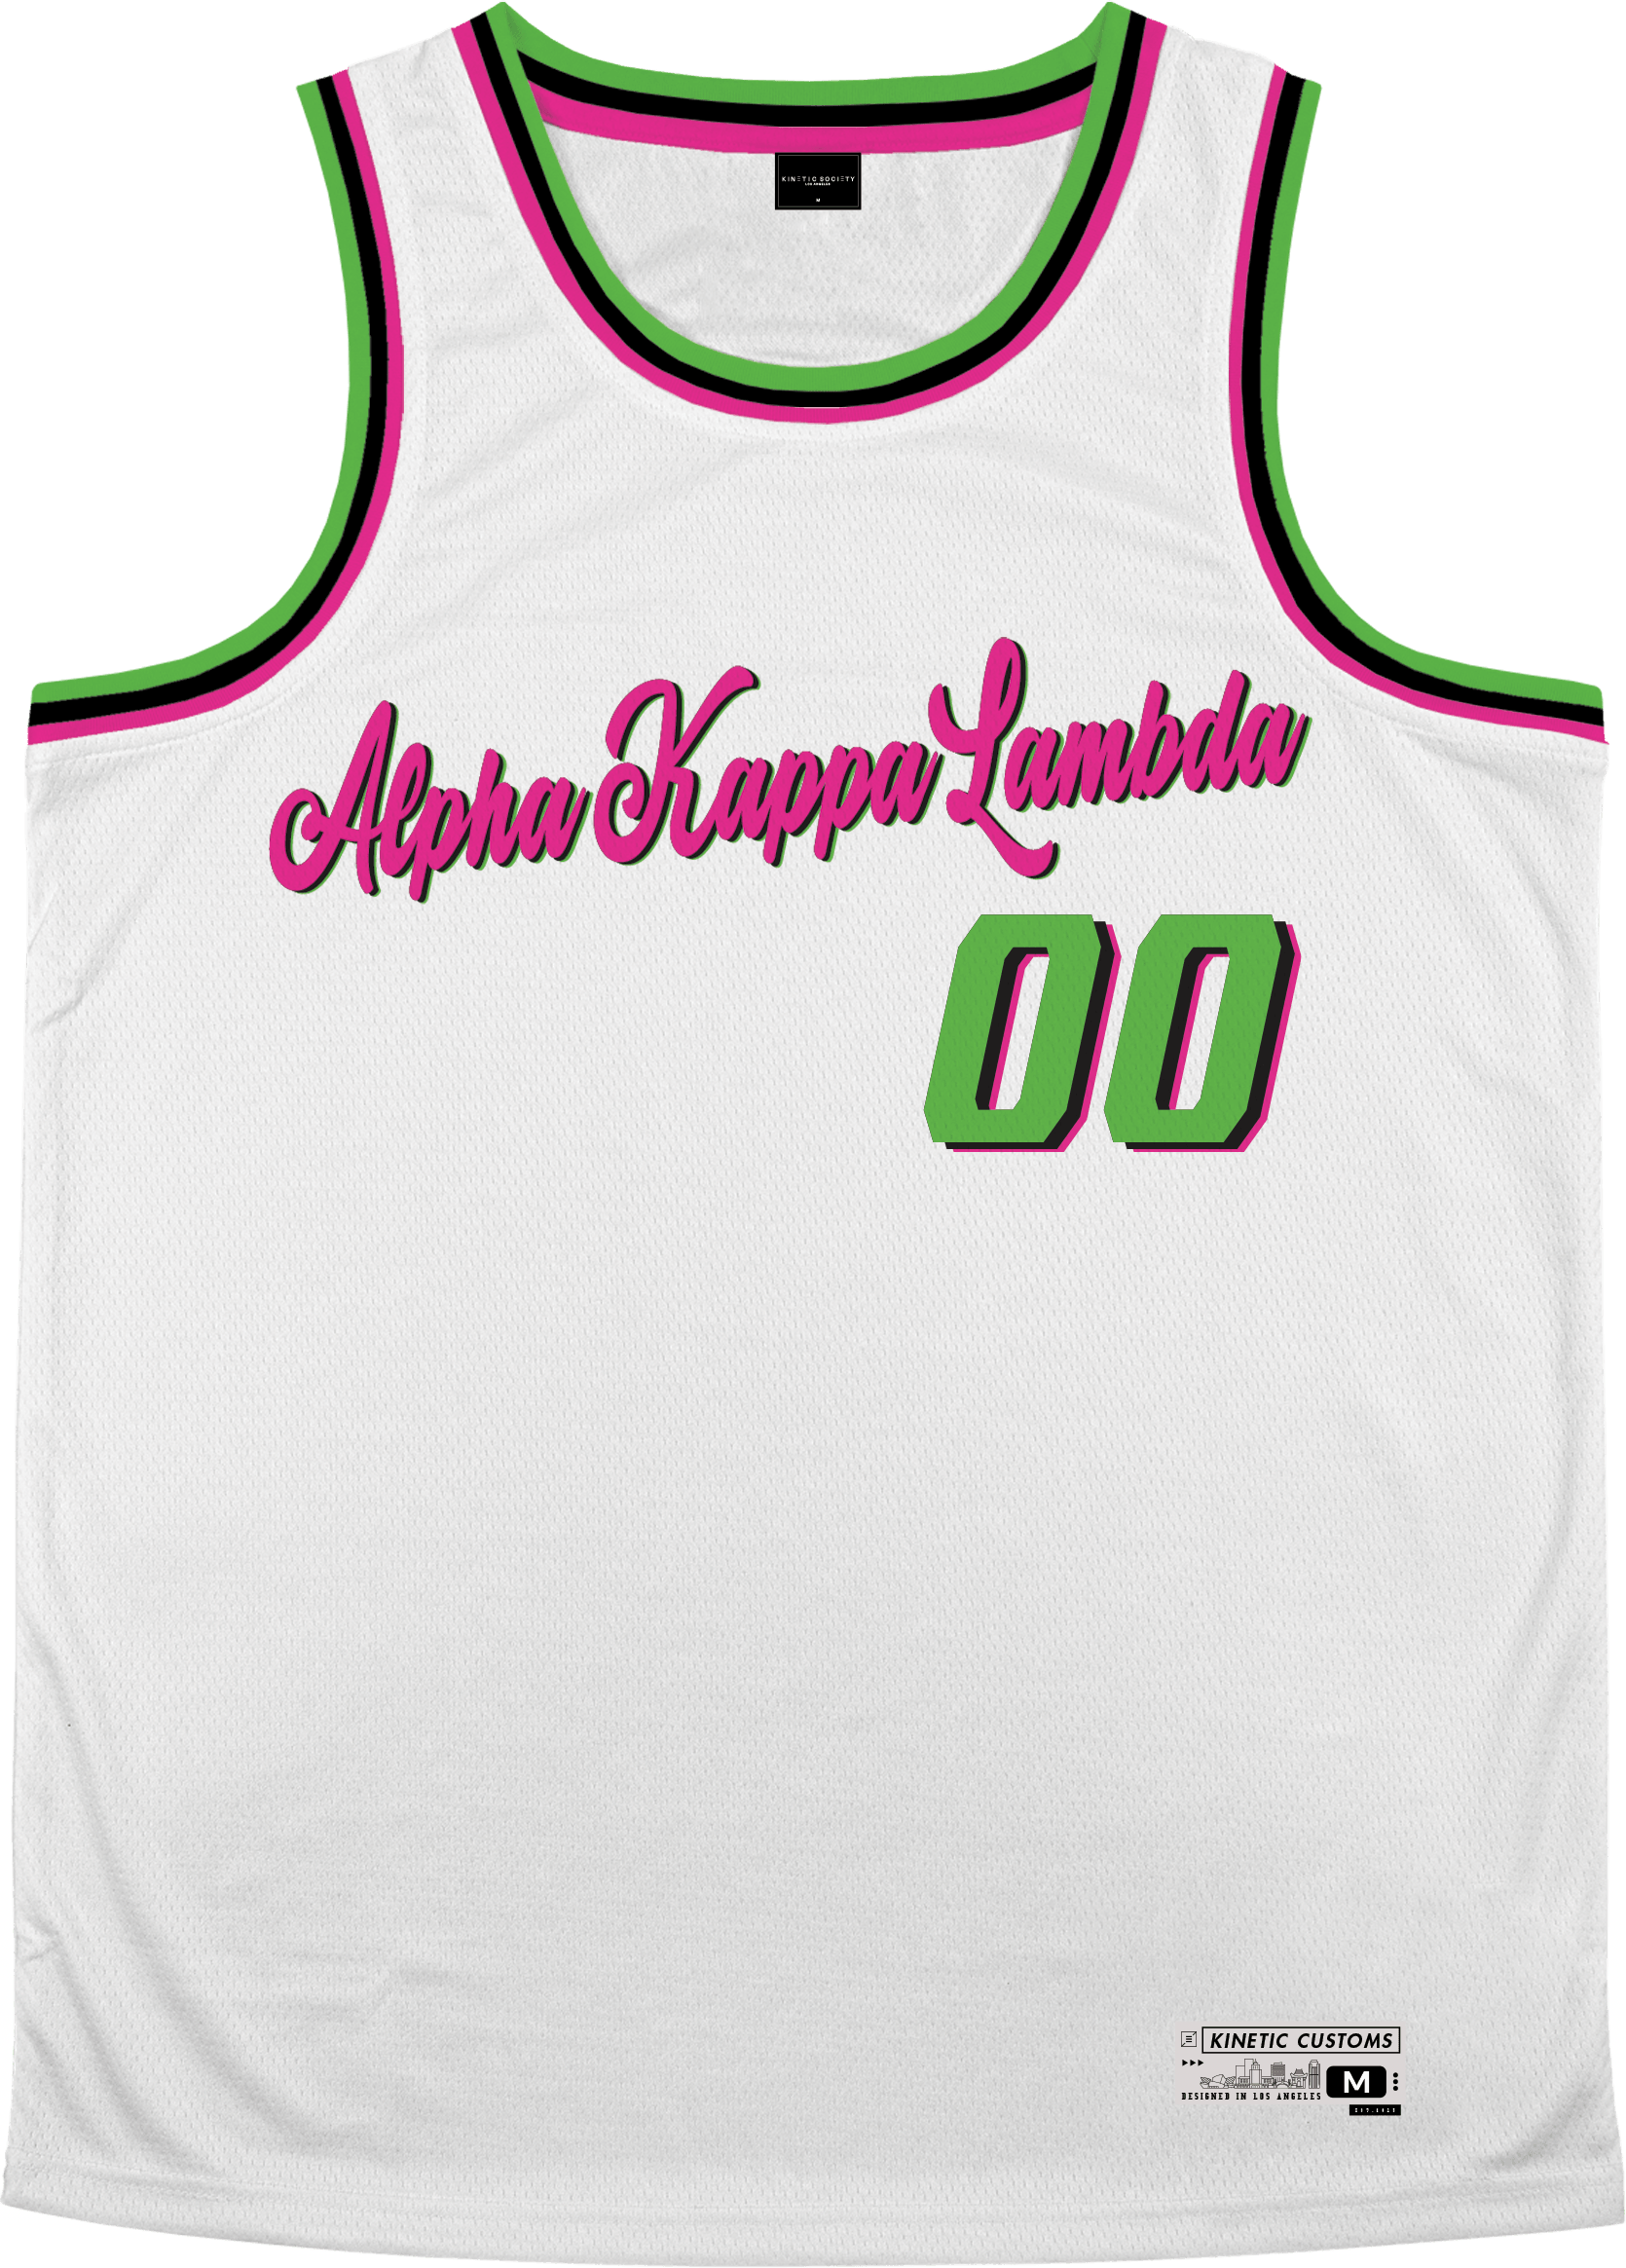 Alpha Kappa Lambda - Bubble Gum Basketball Jersey Premium Basketball Kinetic Society LLC 